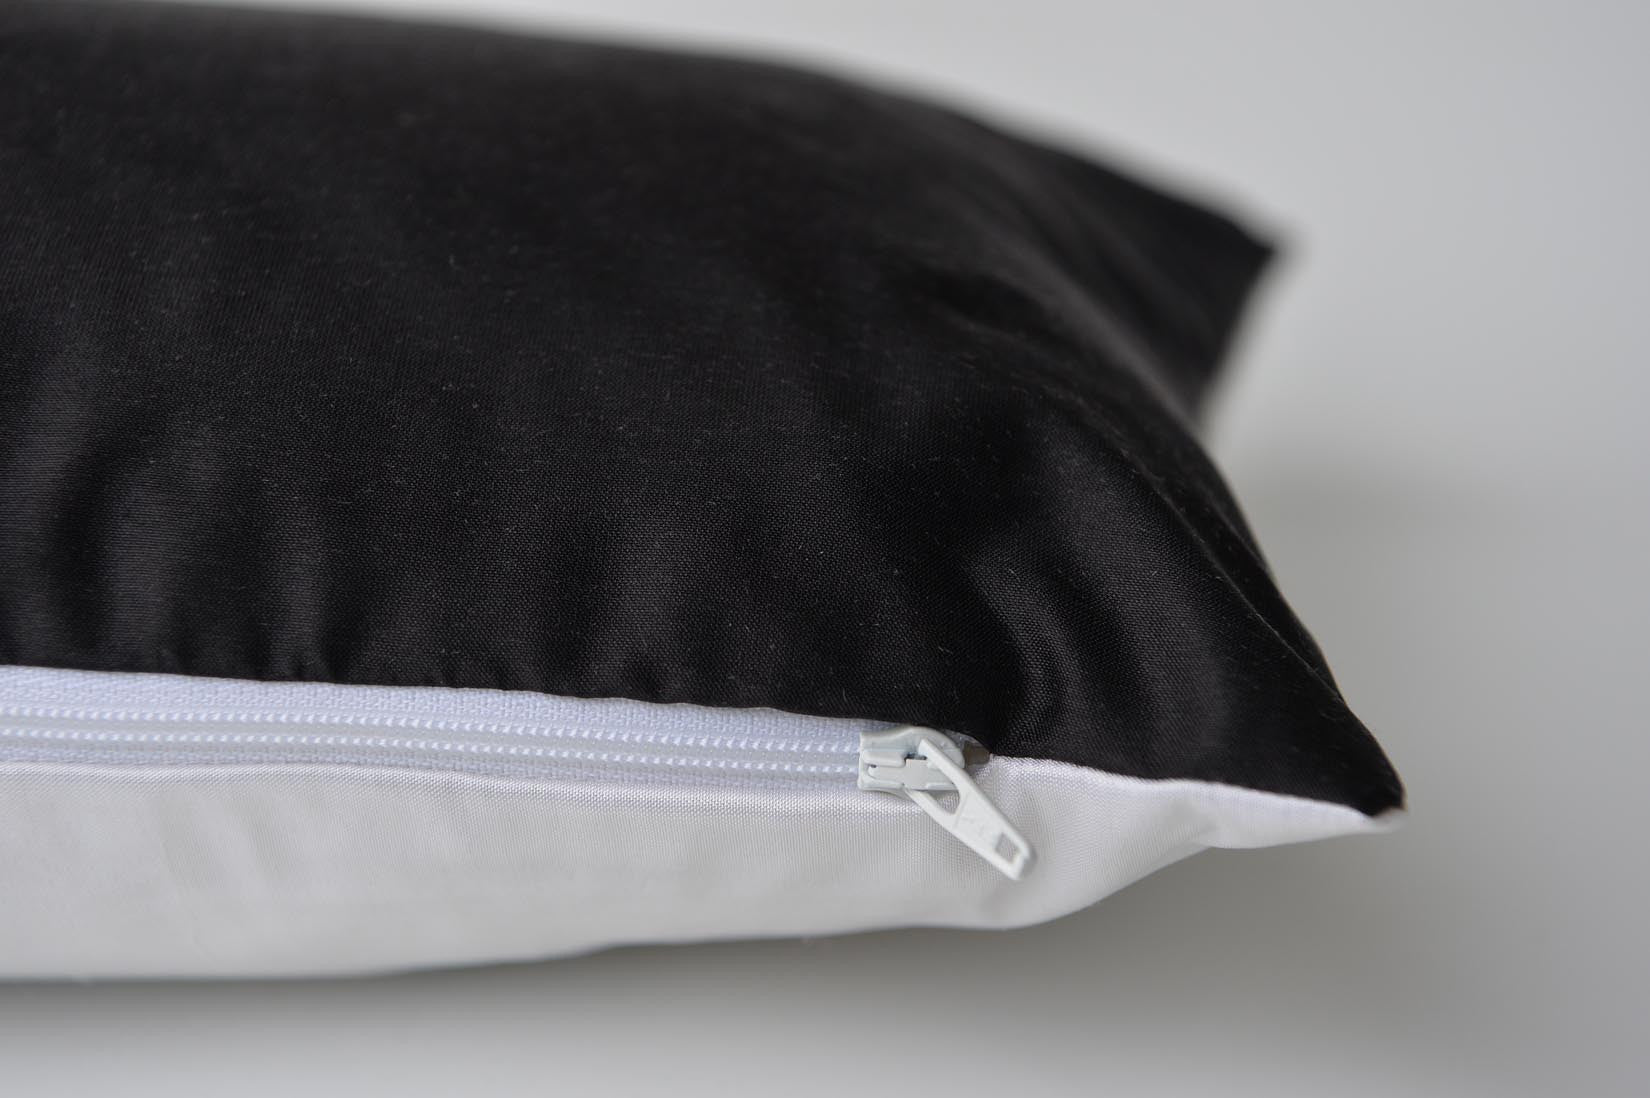 "Picot" Black silk cushion - MyBilletDoux.com